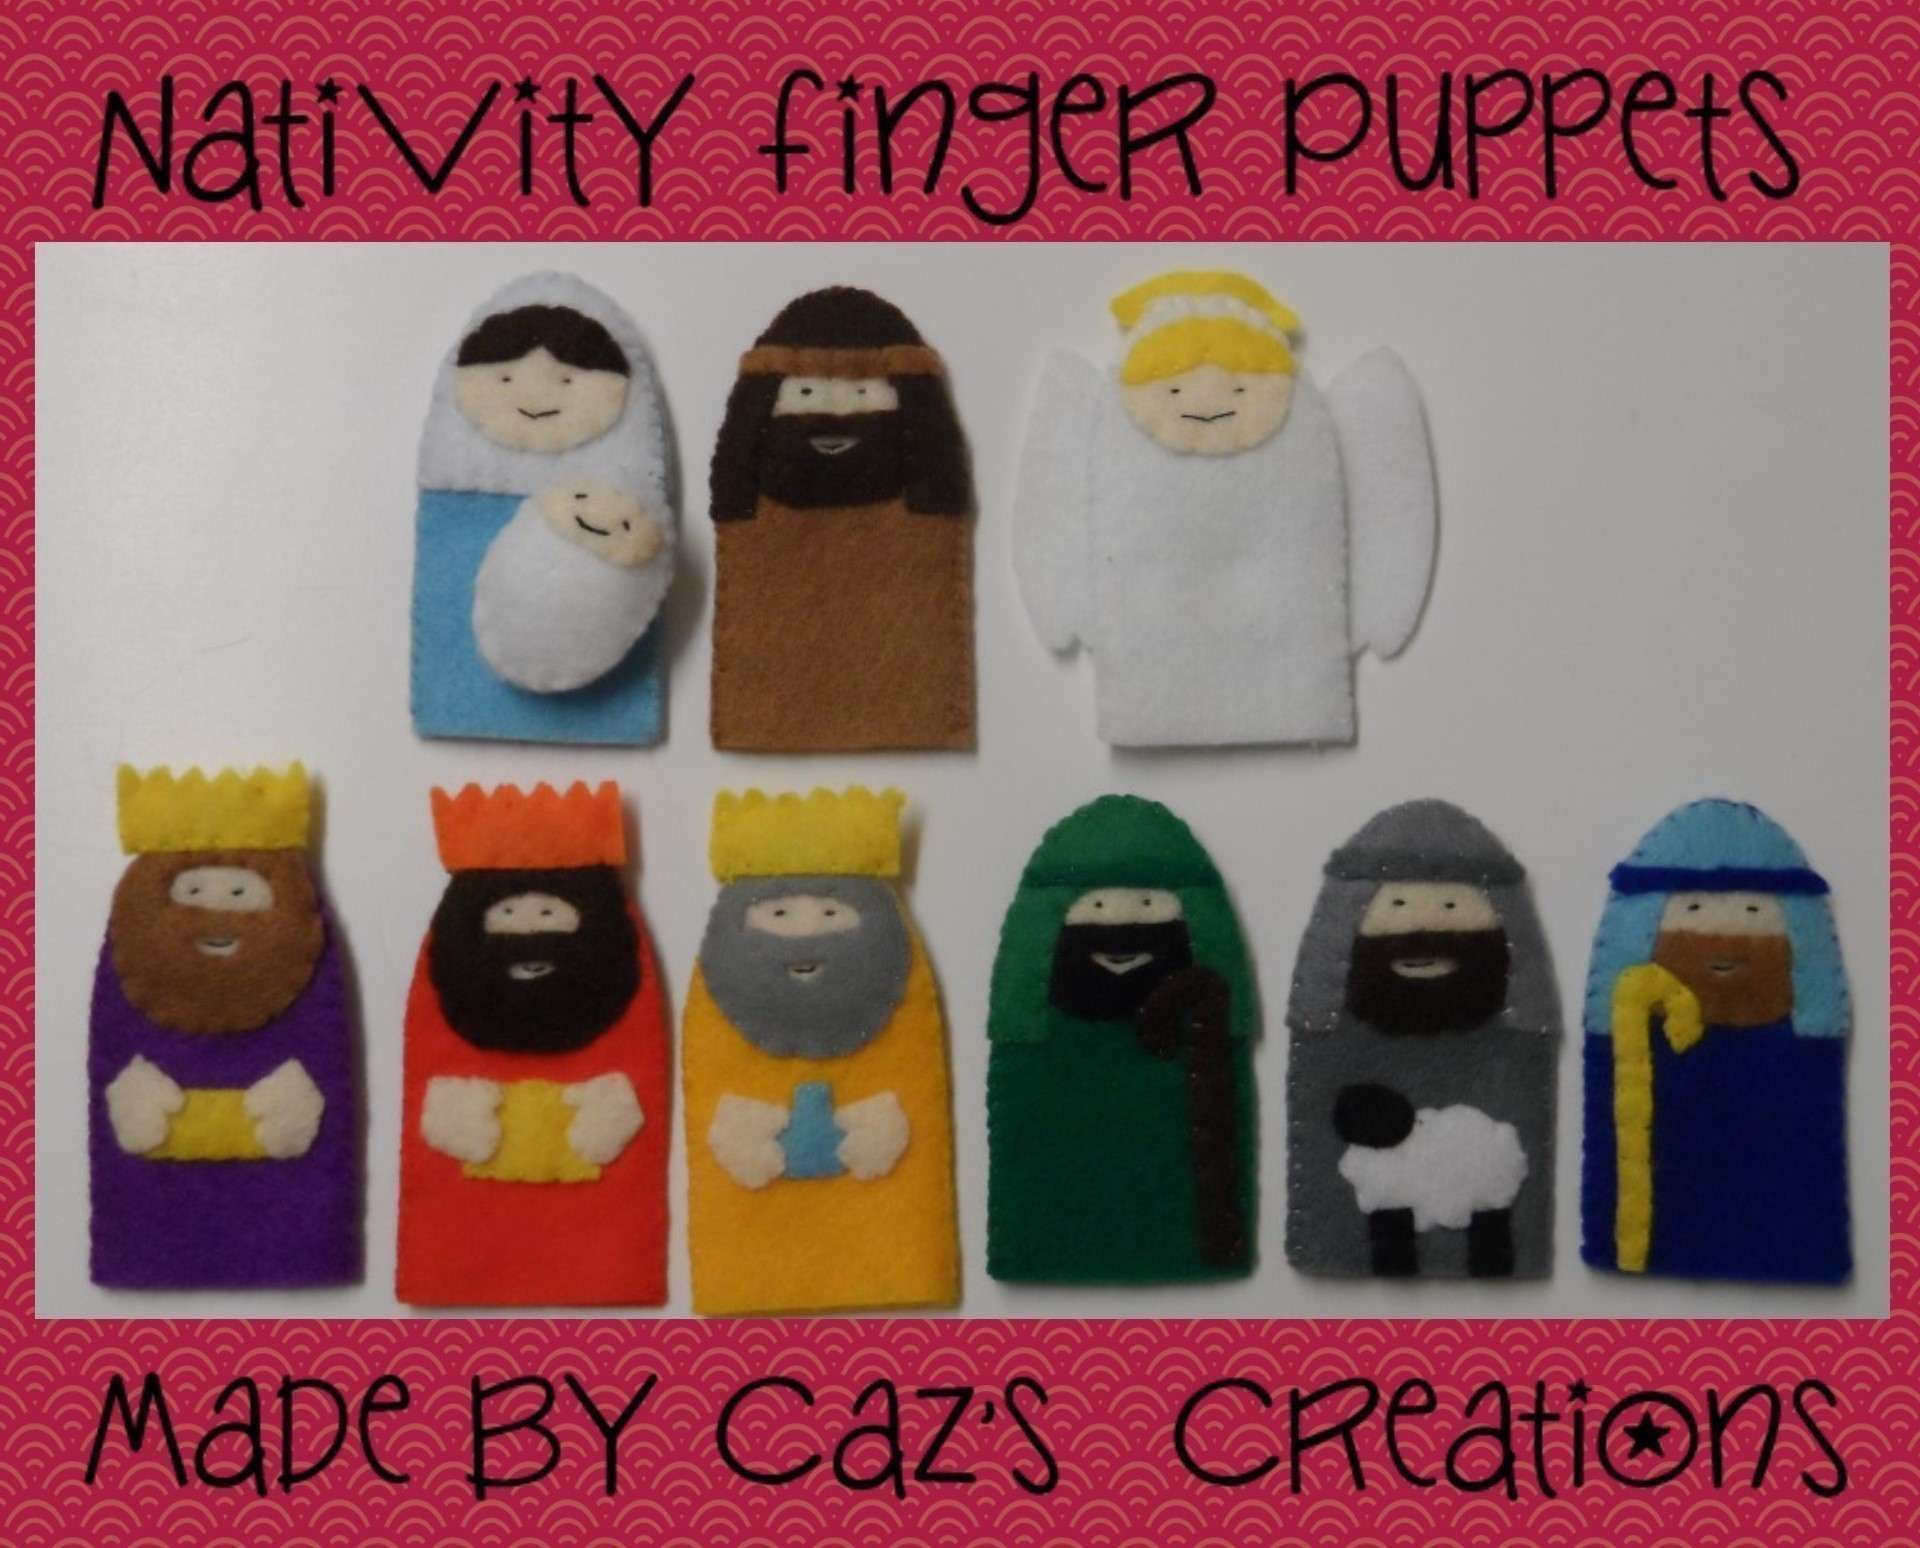 Nativity Knitting Pattern Free Felt Mary Joseph Finger Puppets How To Make A Nativity Scene